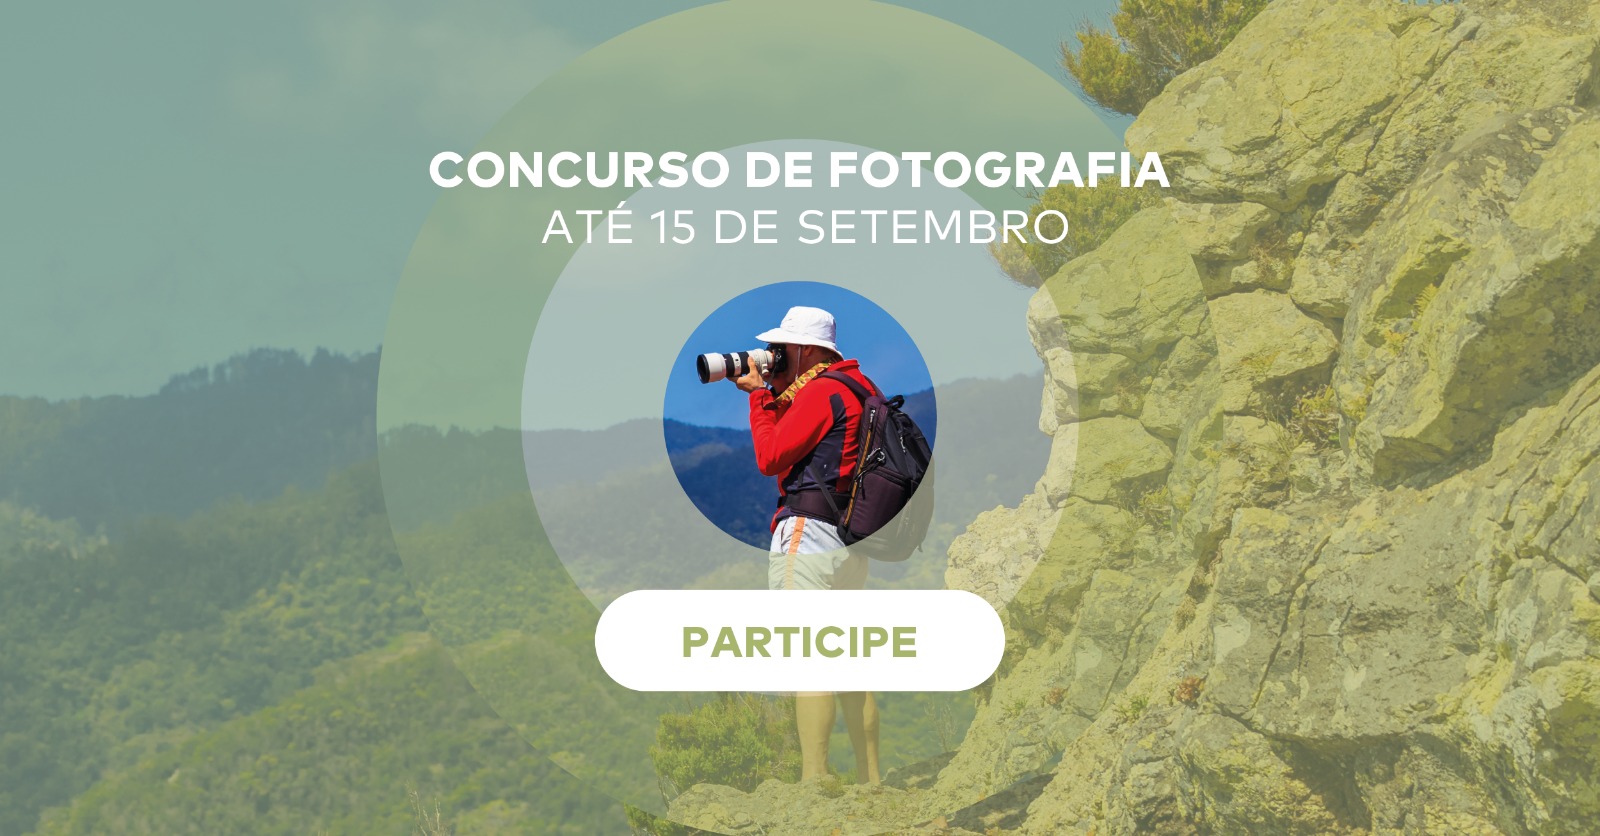 Photo Contest | "Biosphere Reserves